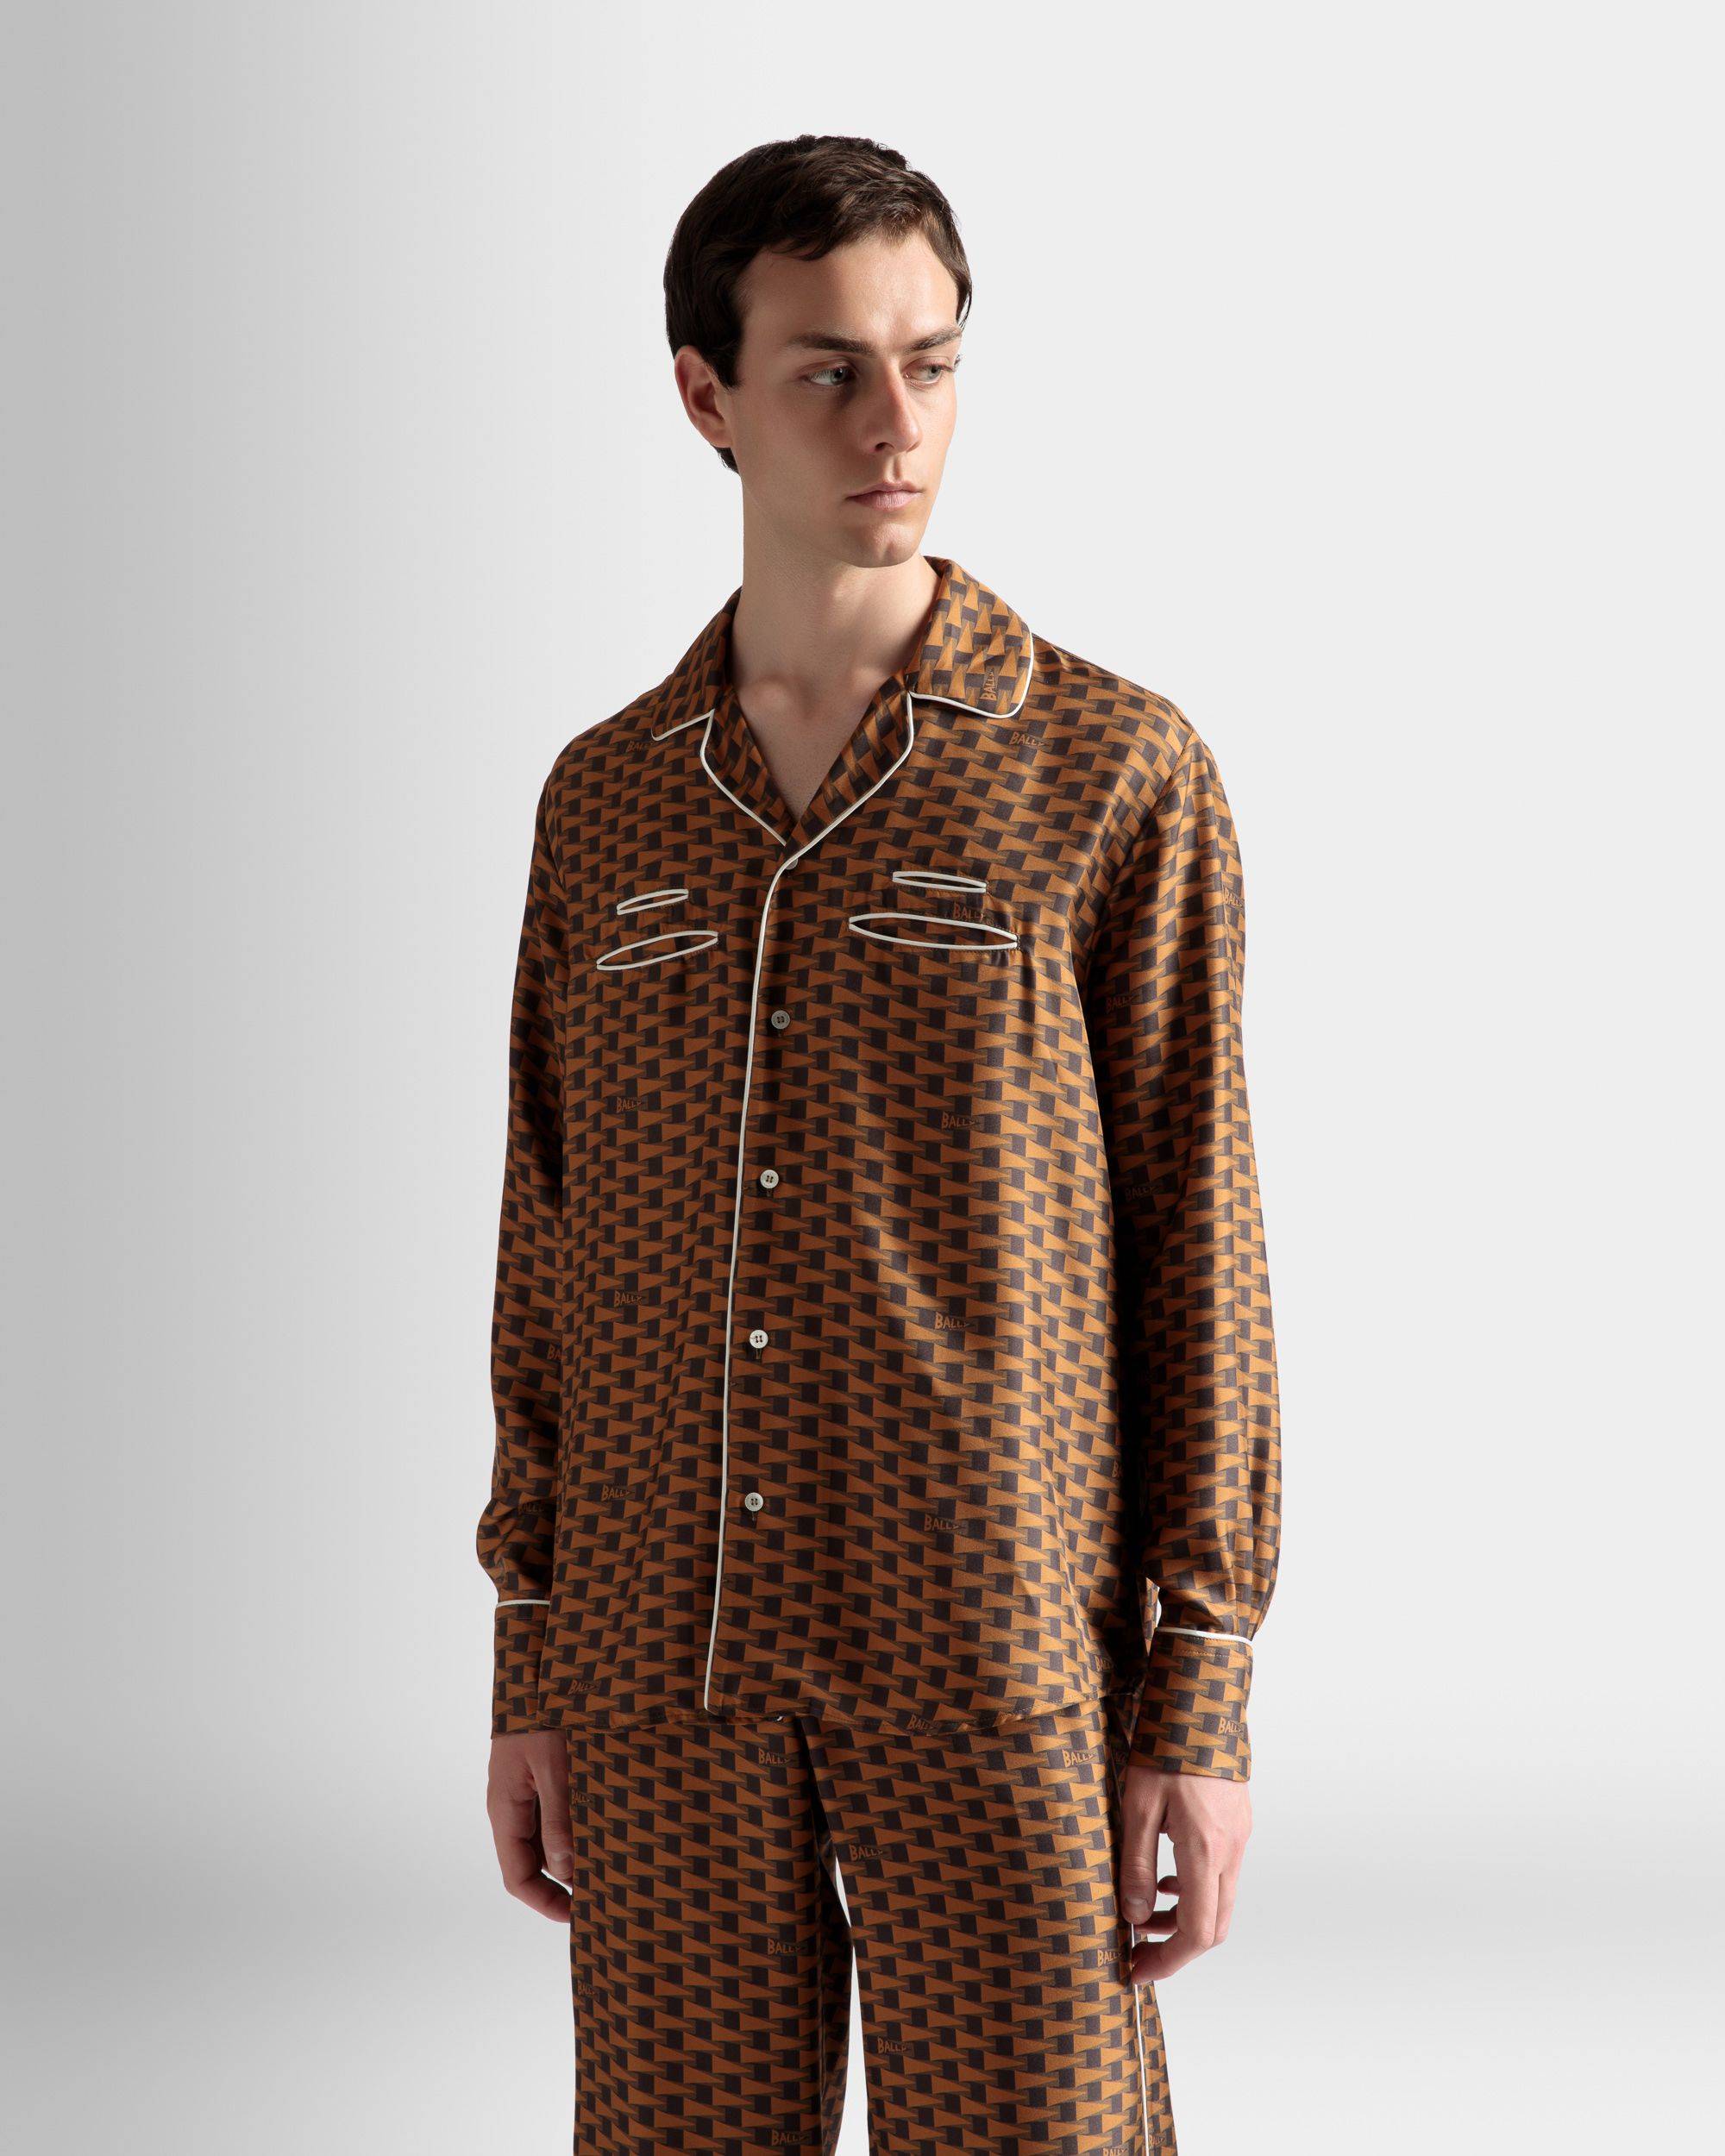 Hemd mit Pennant-Print | Herrenhemd | Braune Seide | Bally | Model getragen Nahaufnahme